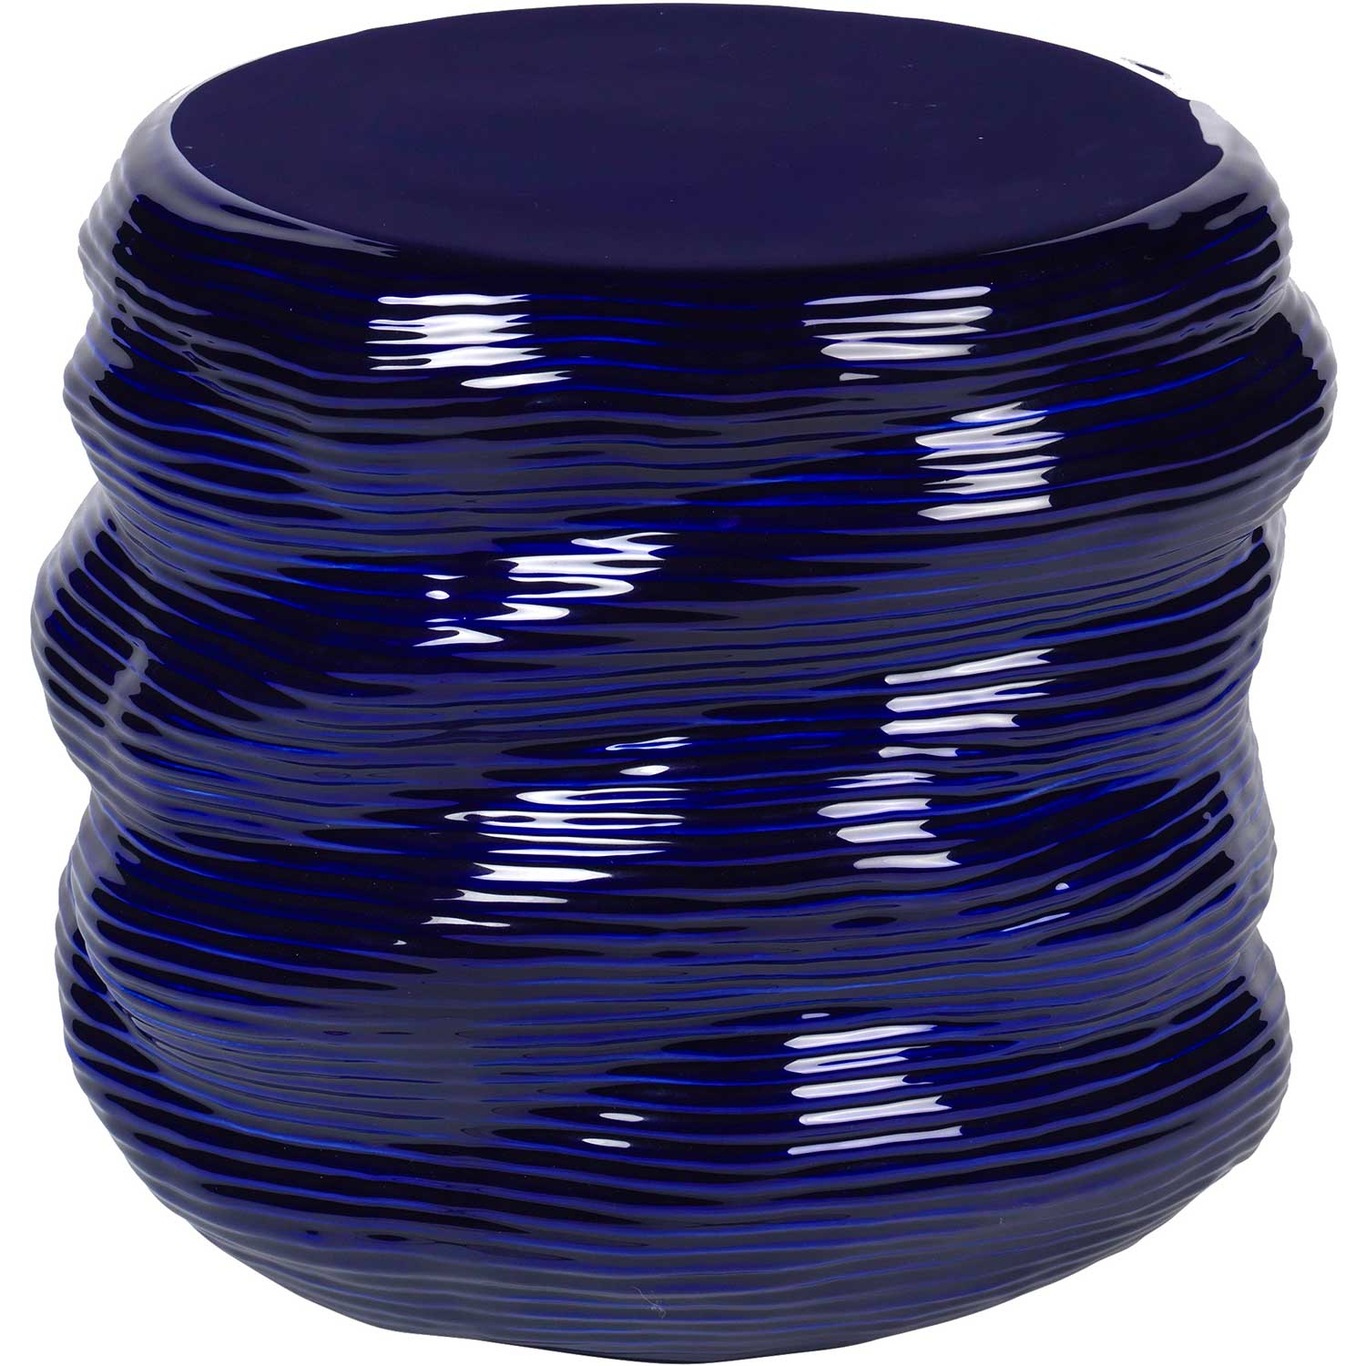 Earthernware Table, Astral Aura Dark Blue